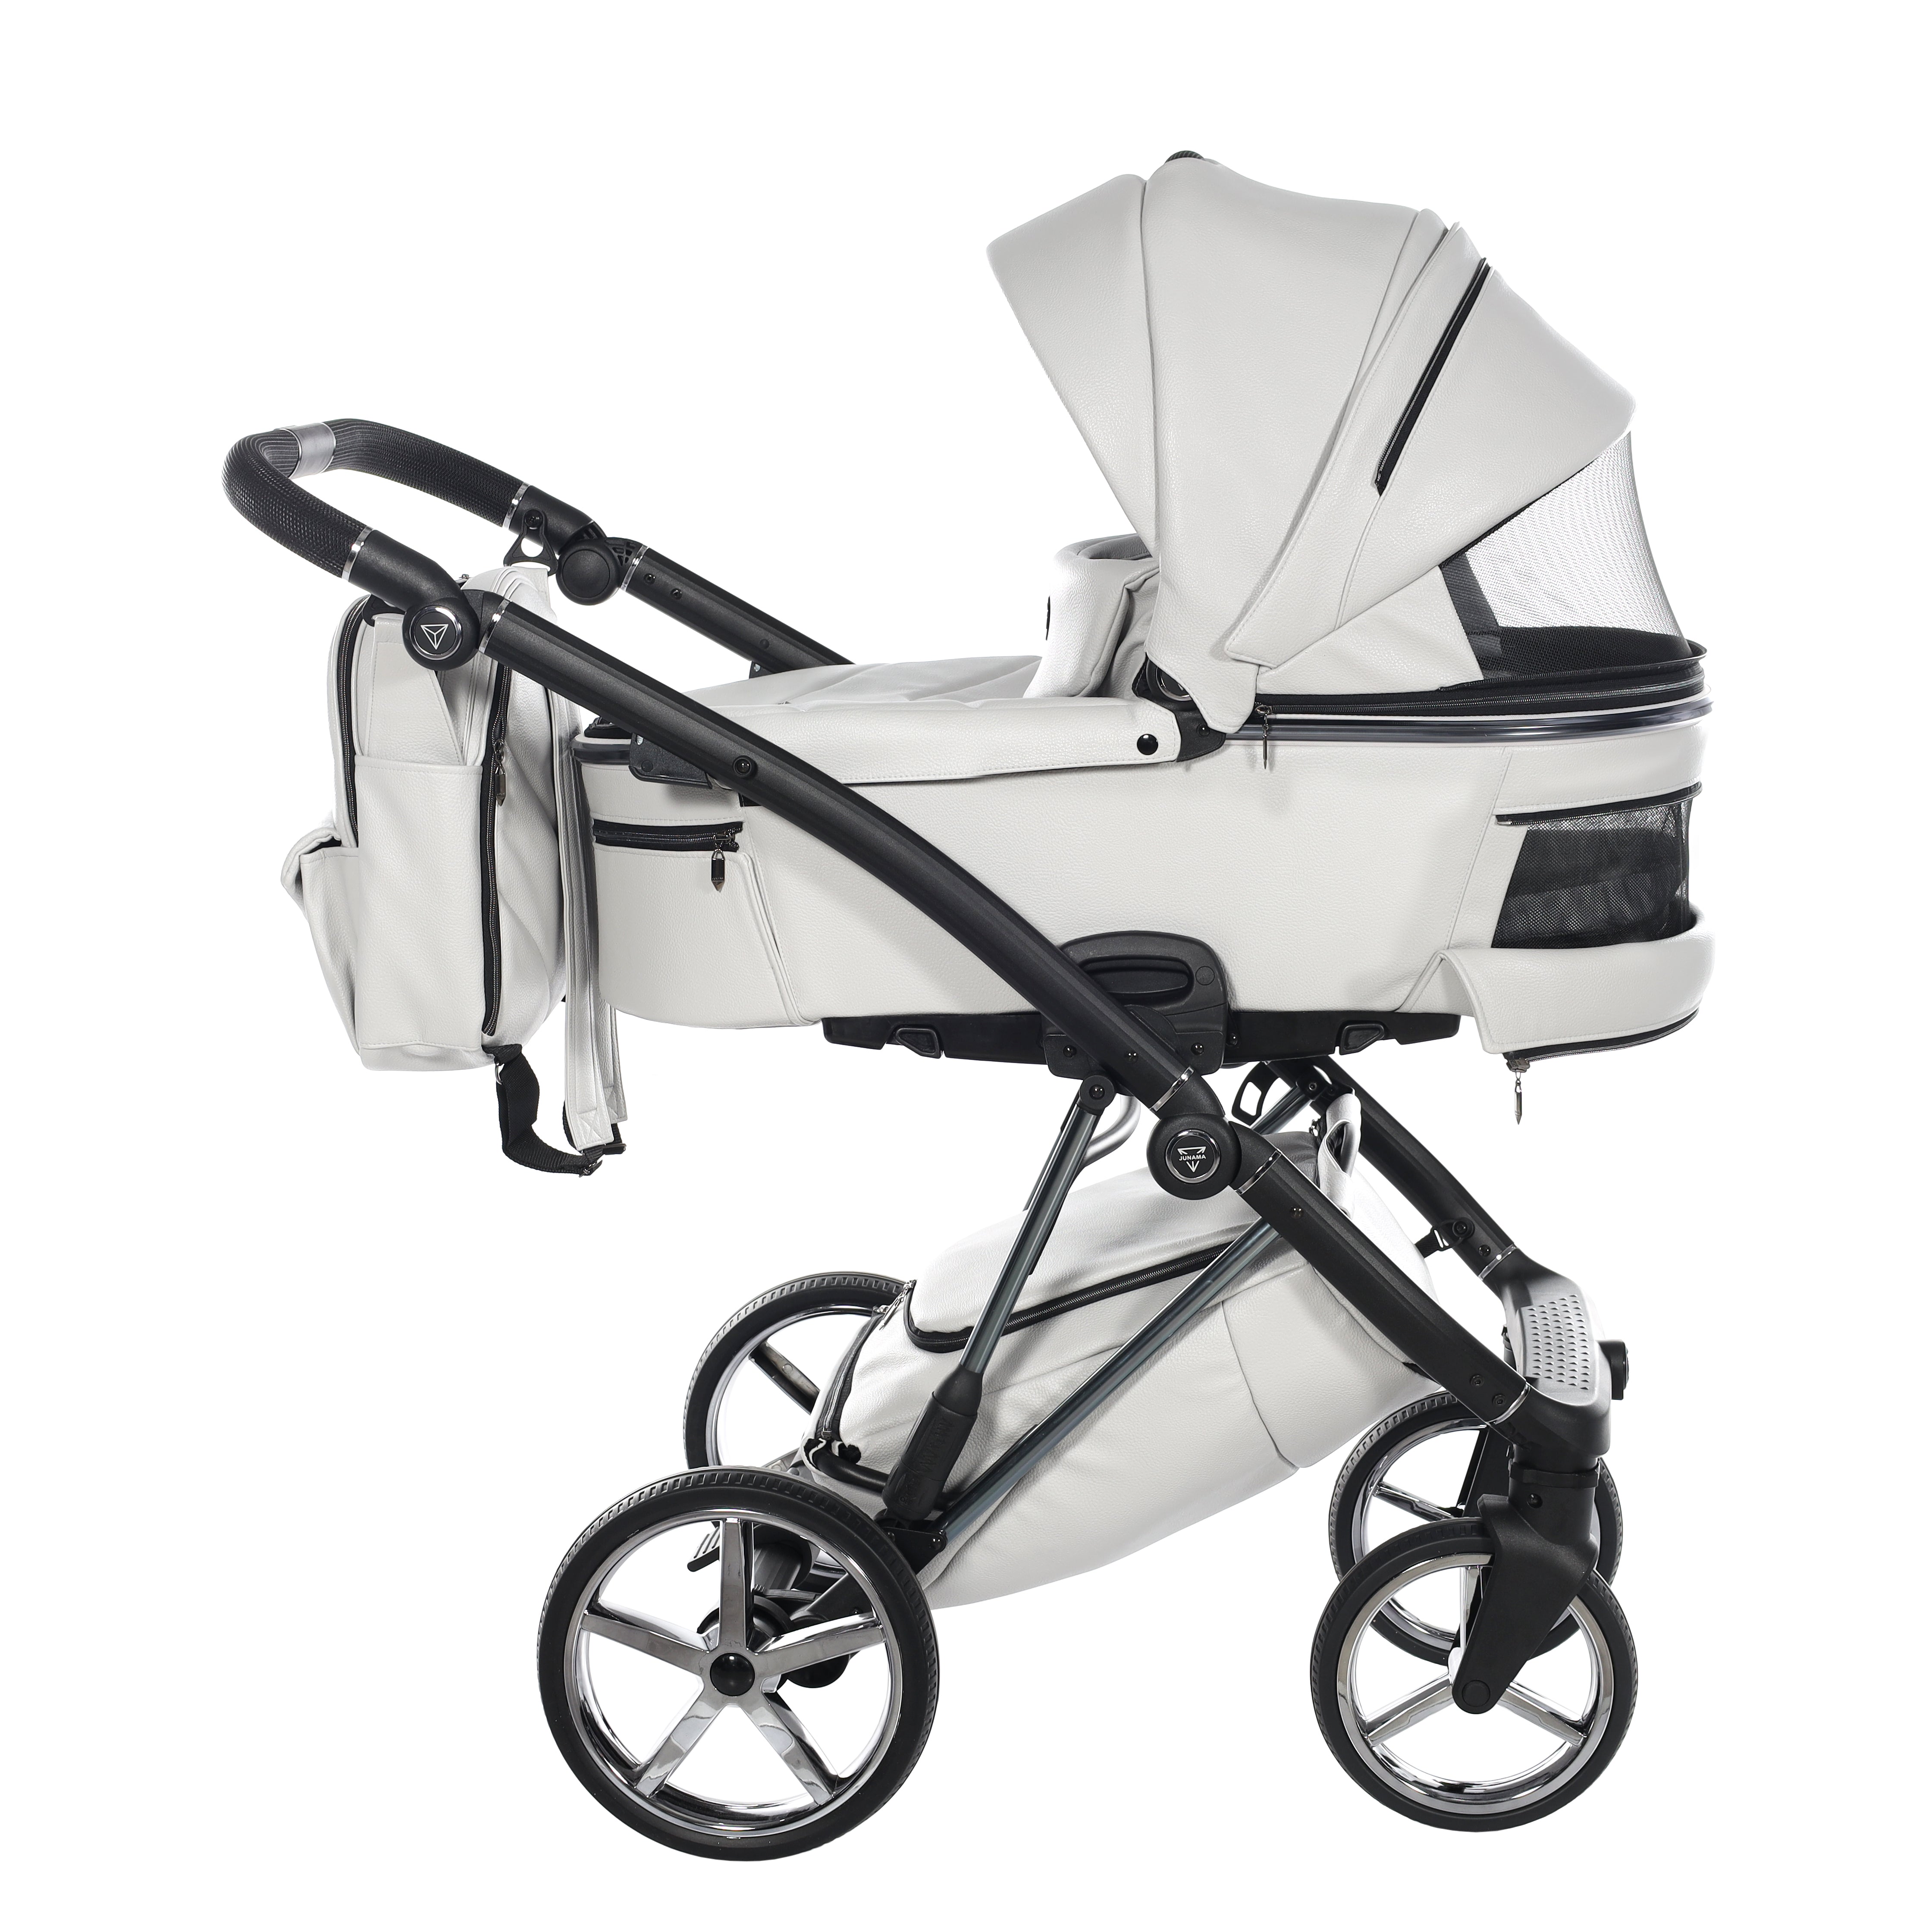 Junama AIR Premium V3, baby stroller and bassinet 2 in 1 - WHITE BLACK, Code number: JUNAIRP04